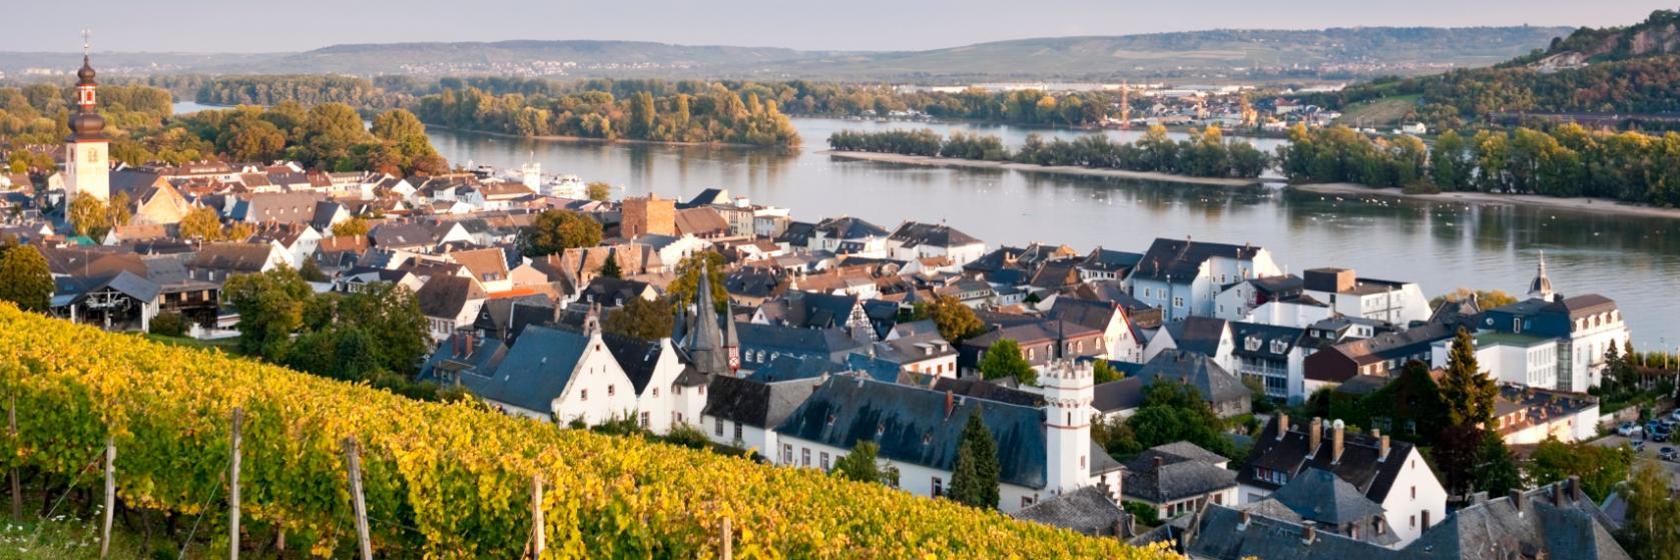 10 Best Rudesheim Am Rhein Hotels Germany From 59